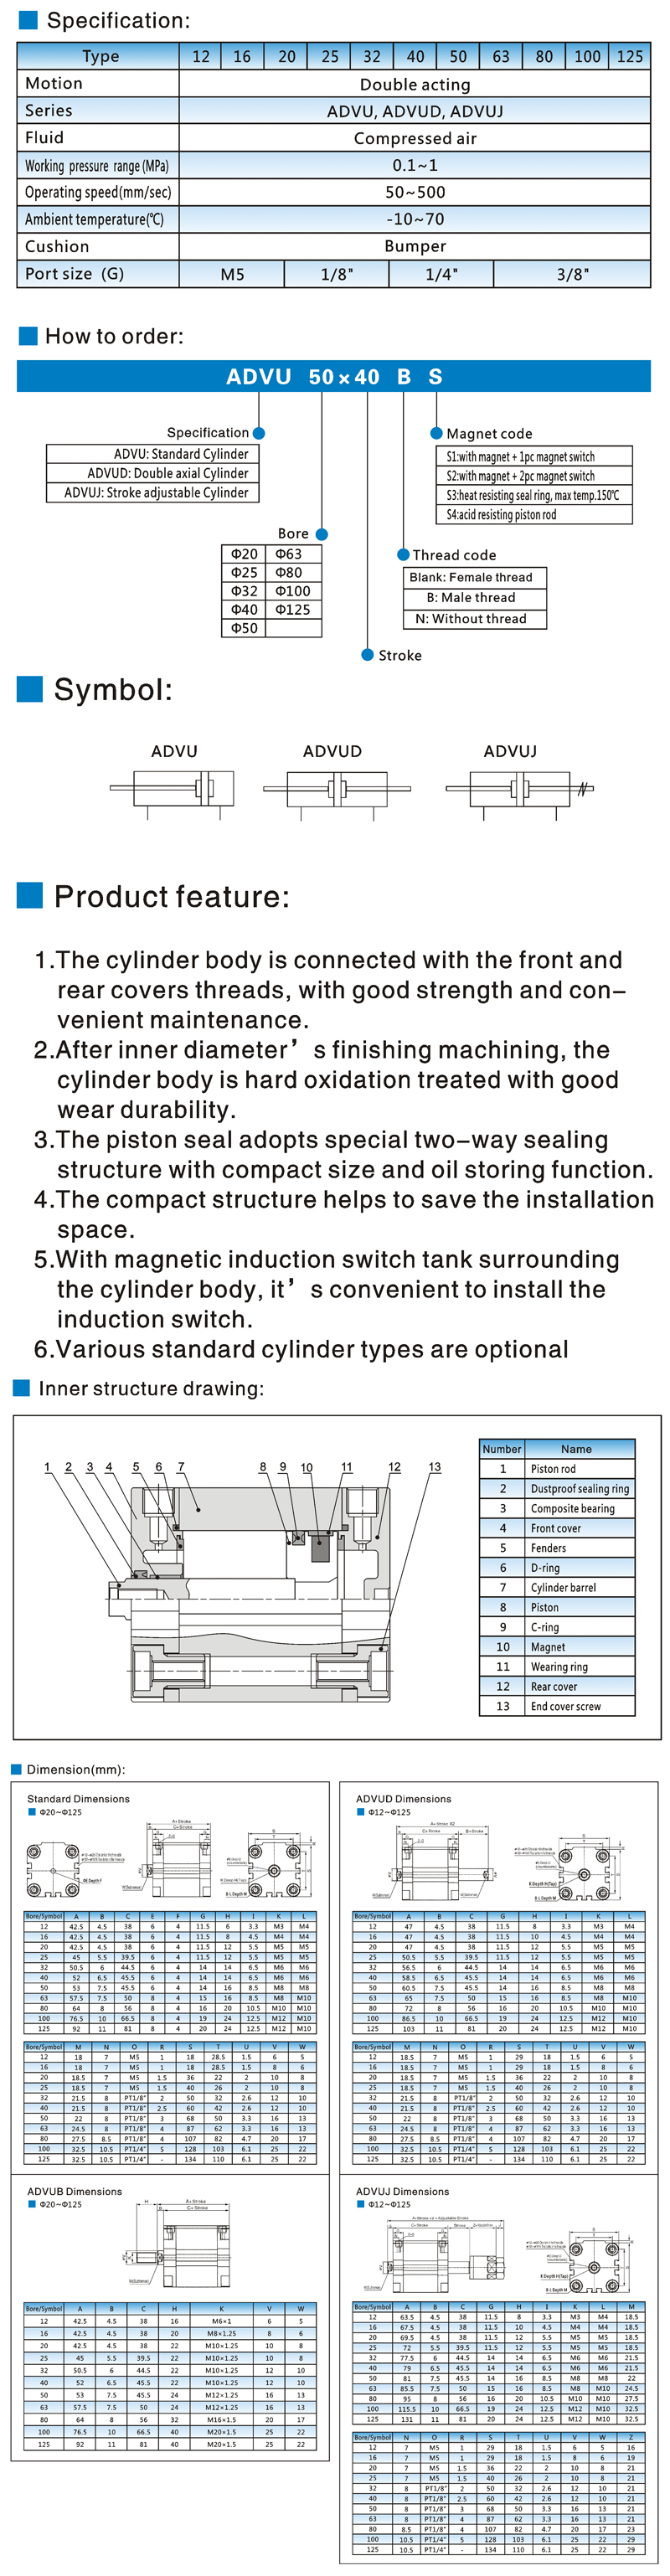 25 ADVU series Cylinder.jpg